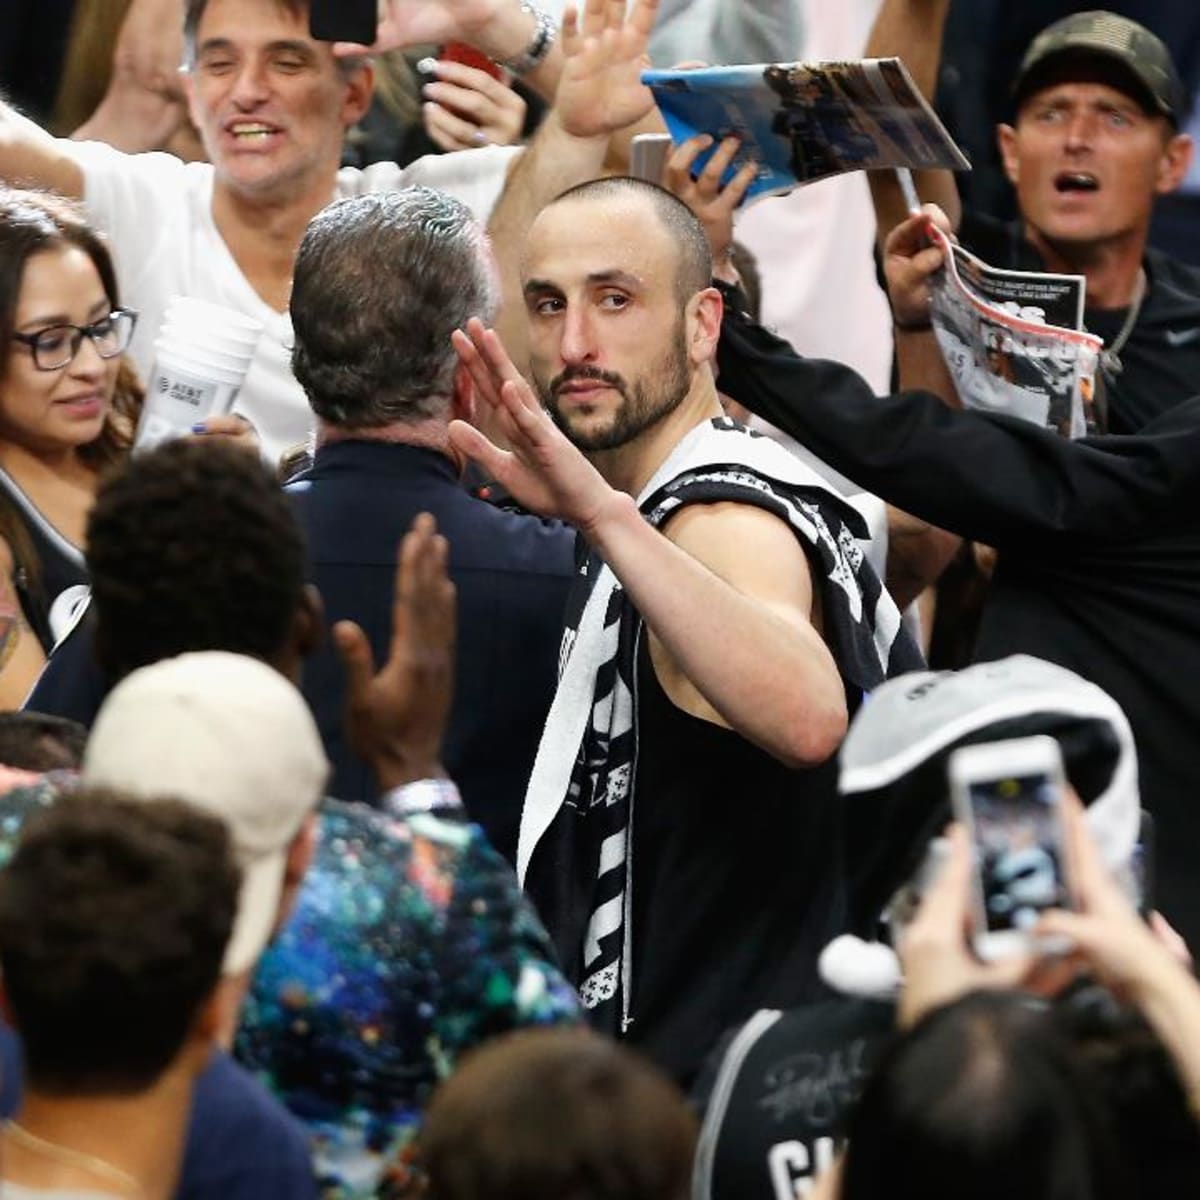 NBA: Spurs to retire Ginobili's jersey